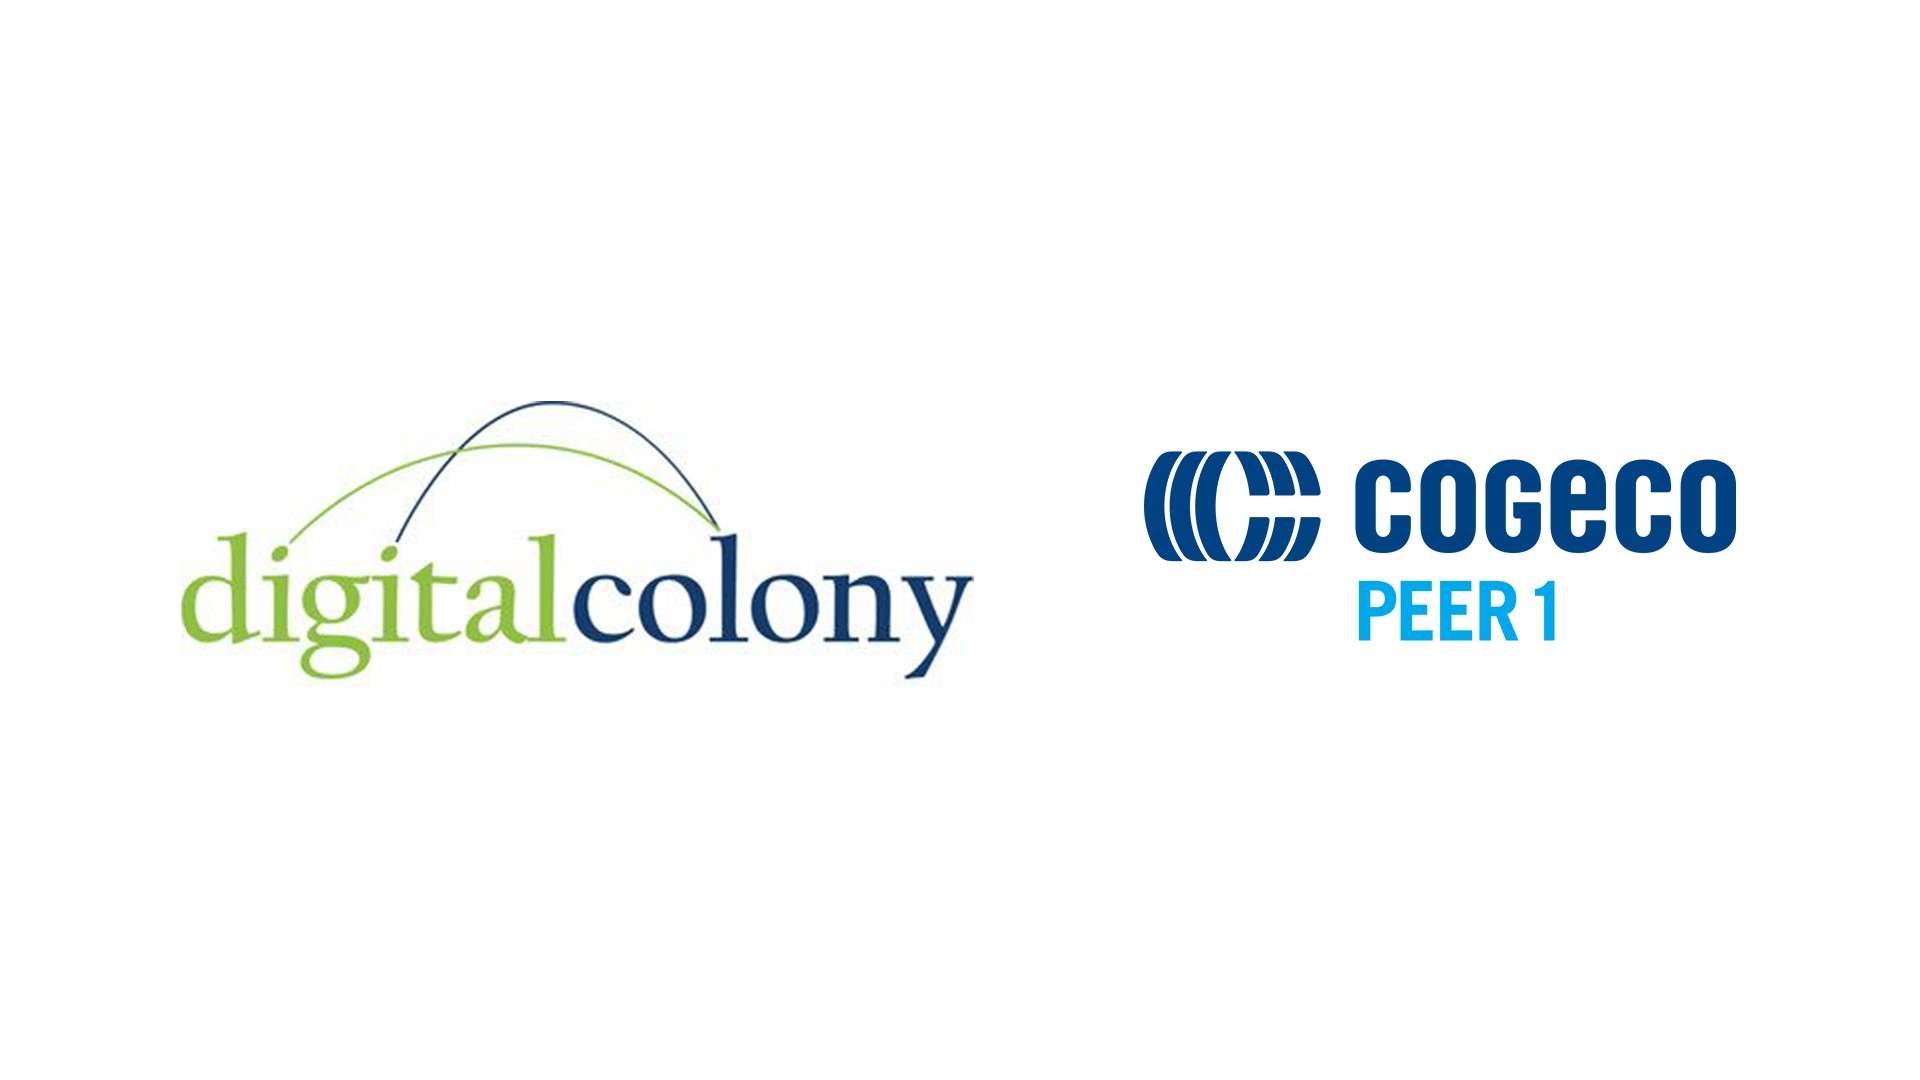 digital colony and cogeco peer 1 logo